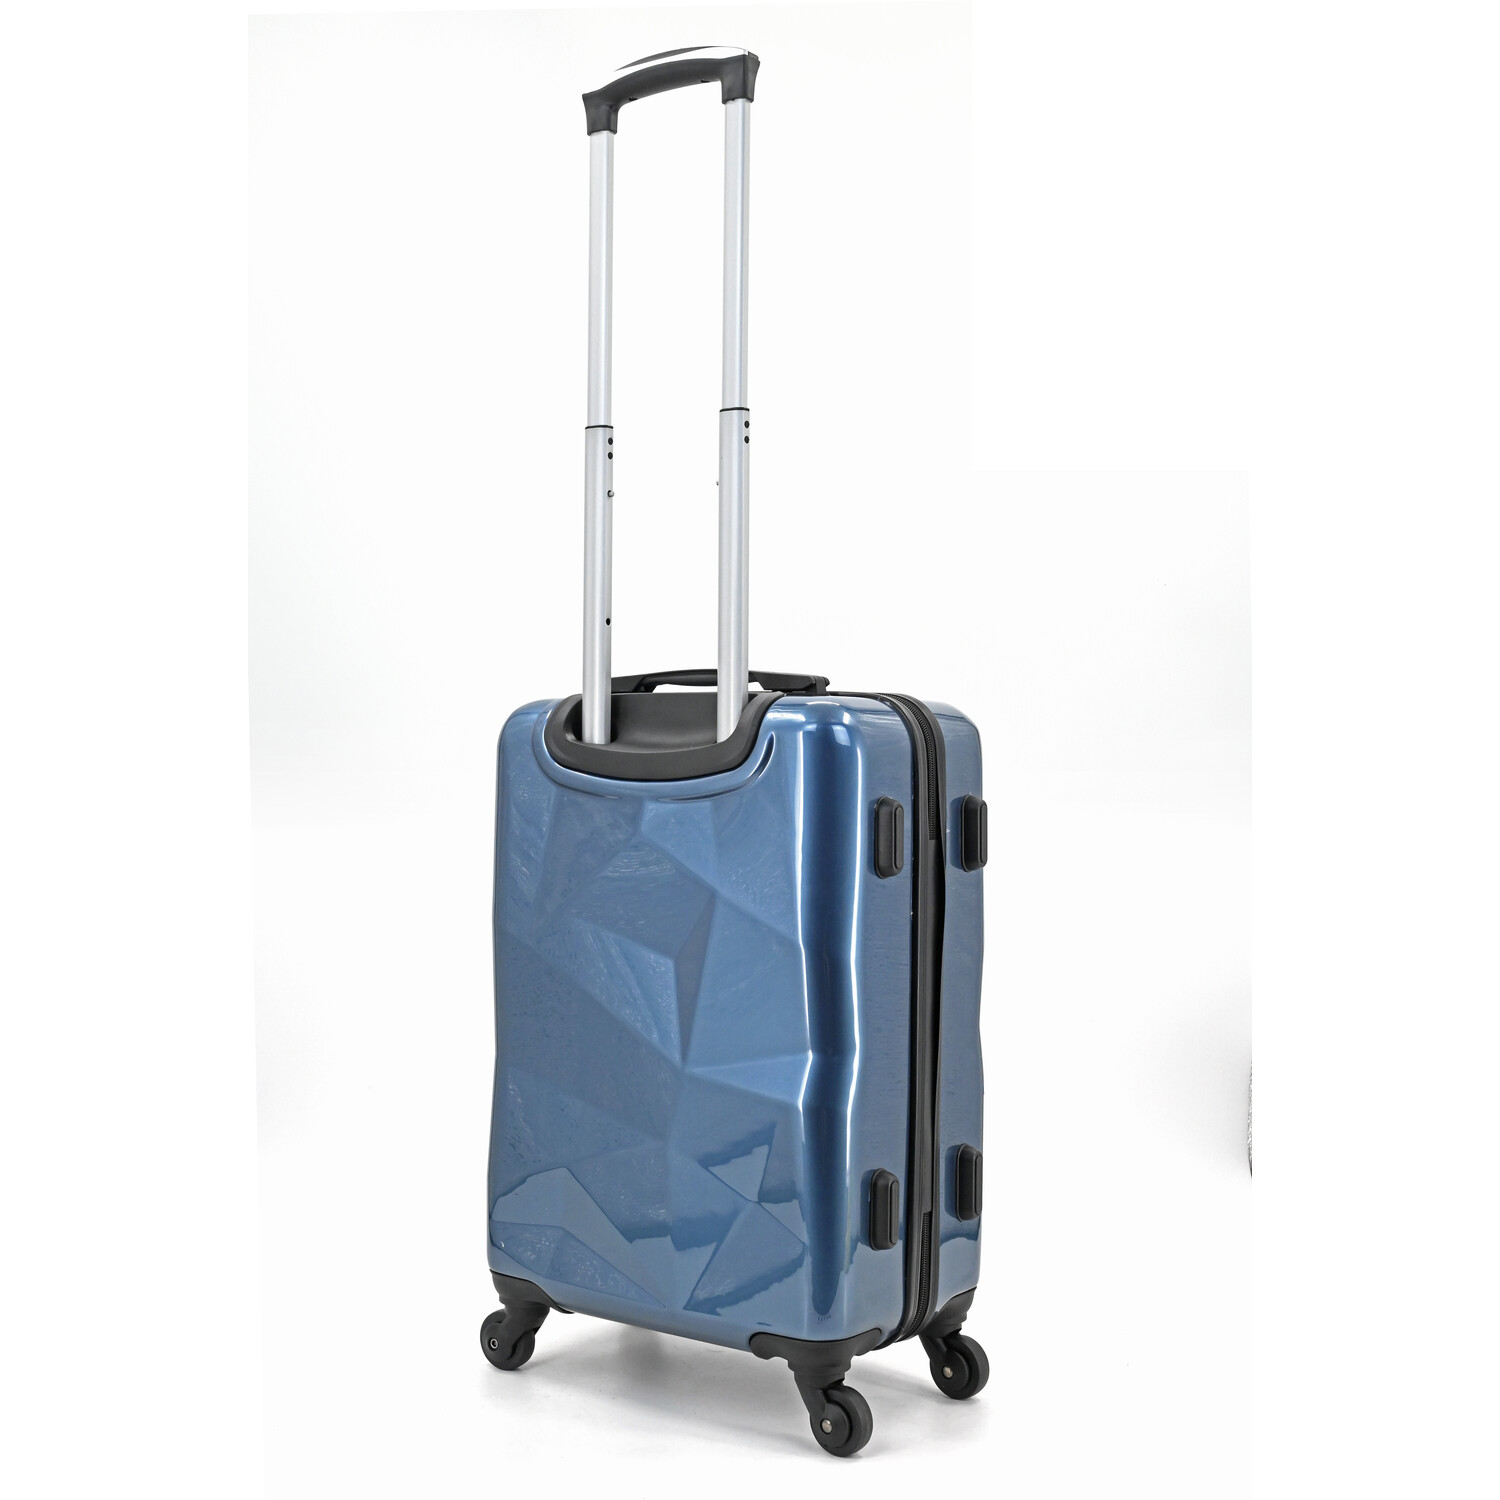 Swift Comet Suitcase - Blue / Cabin Case Image 3